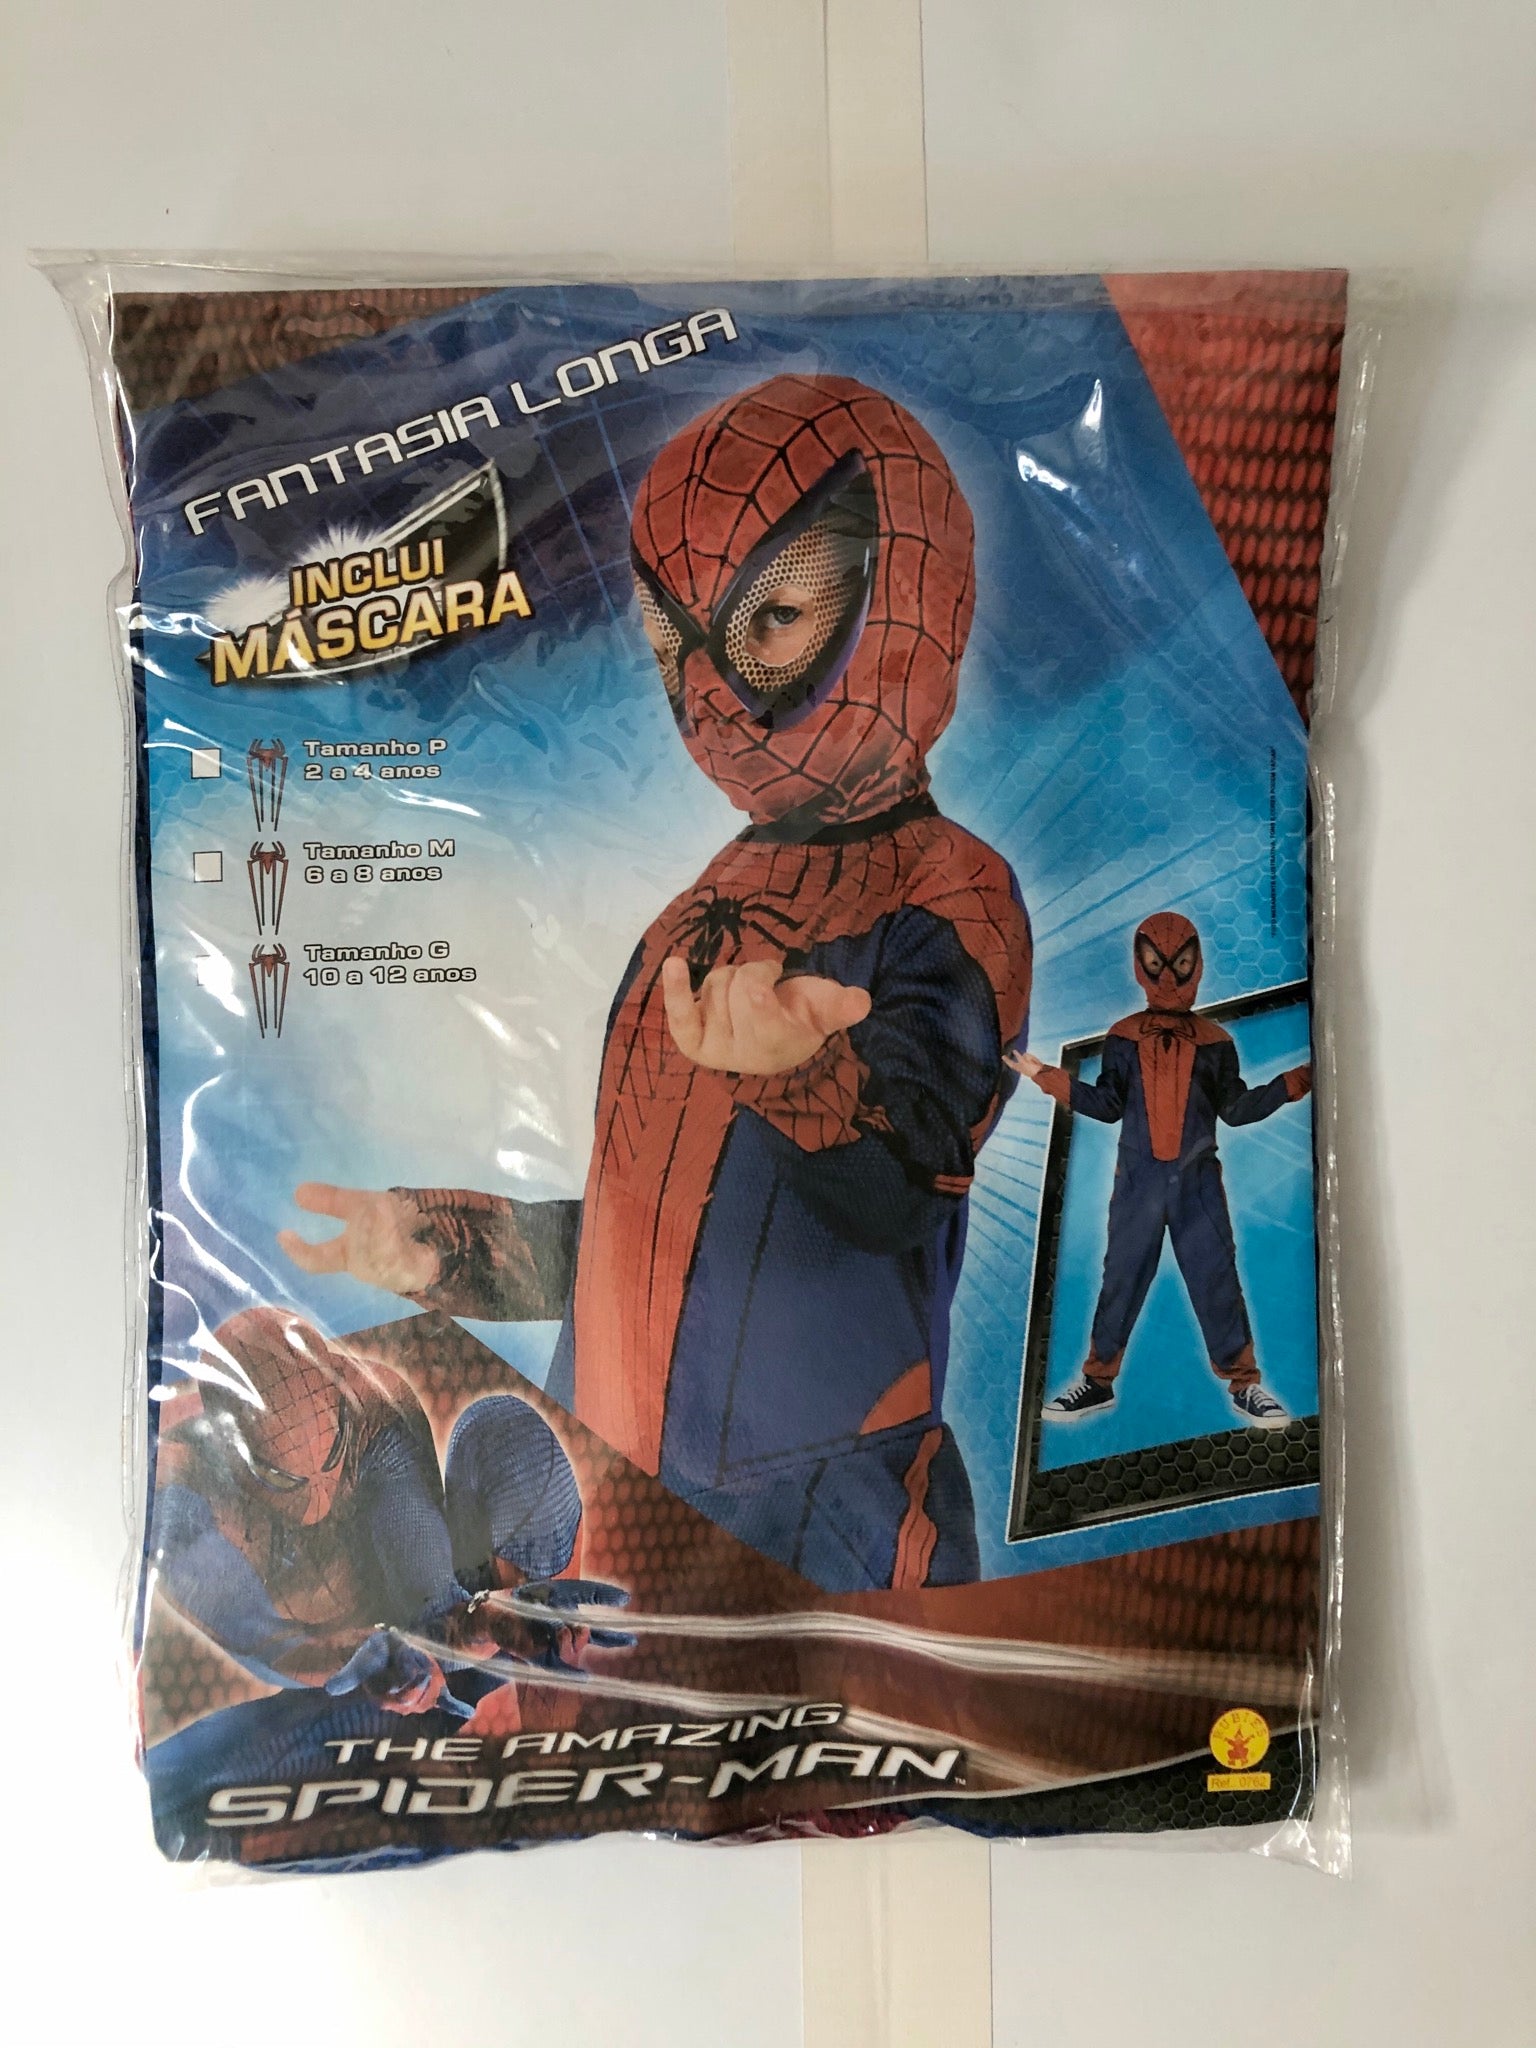 spiderman 4 costume